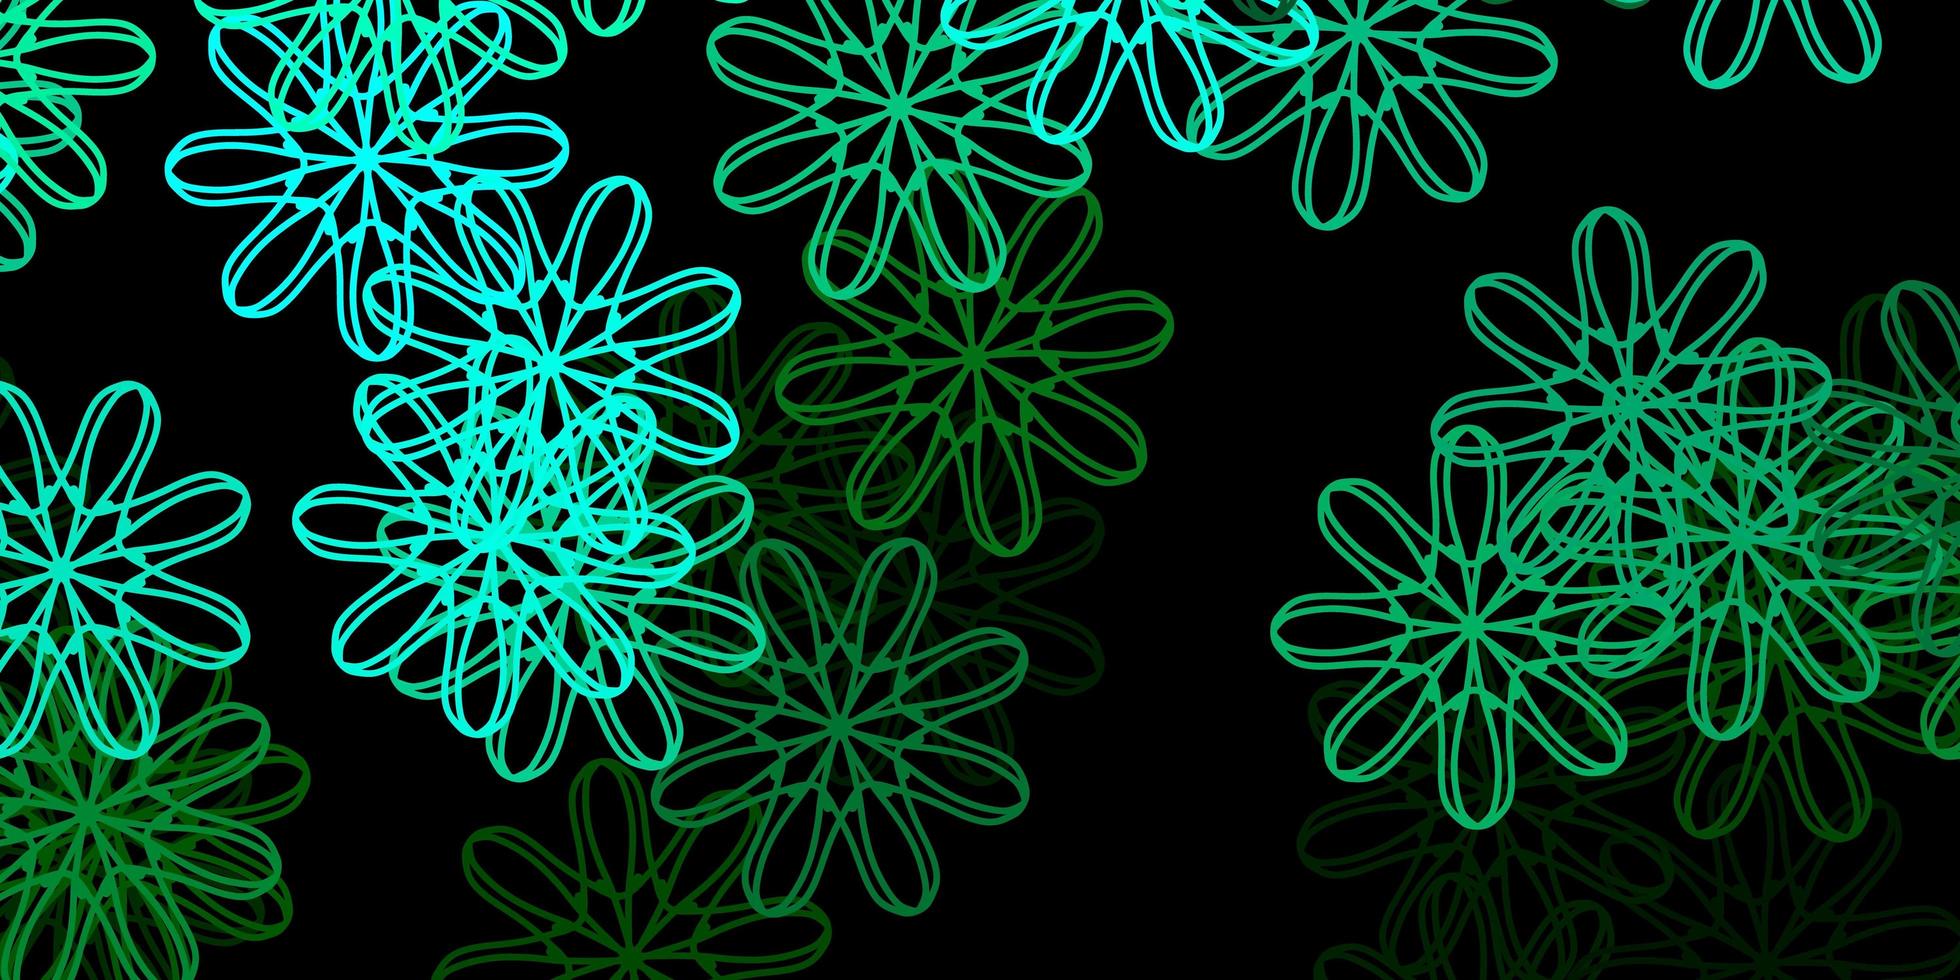 textura vector verde escuro com formas de memphis.